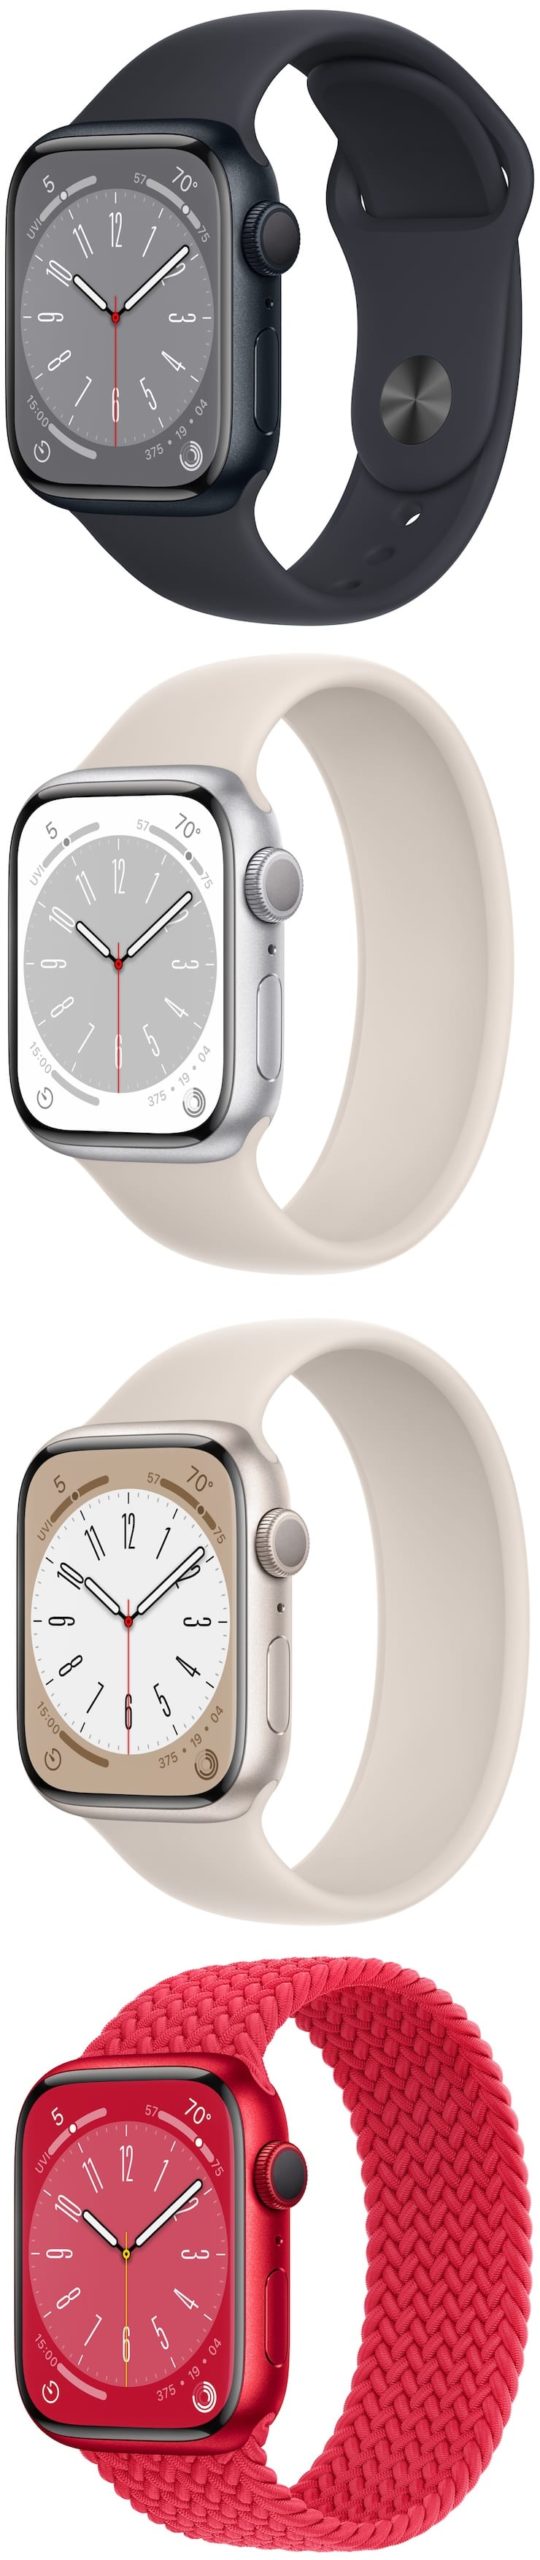 Apple Watch Series 8 (2022) colors